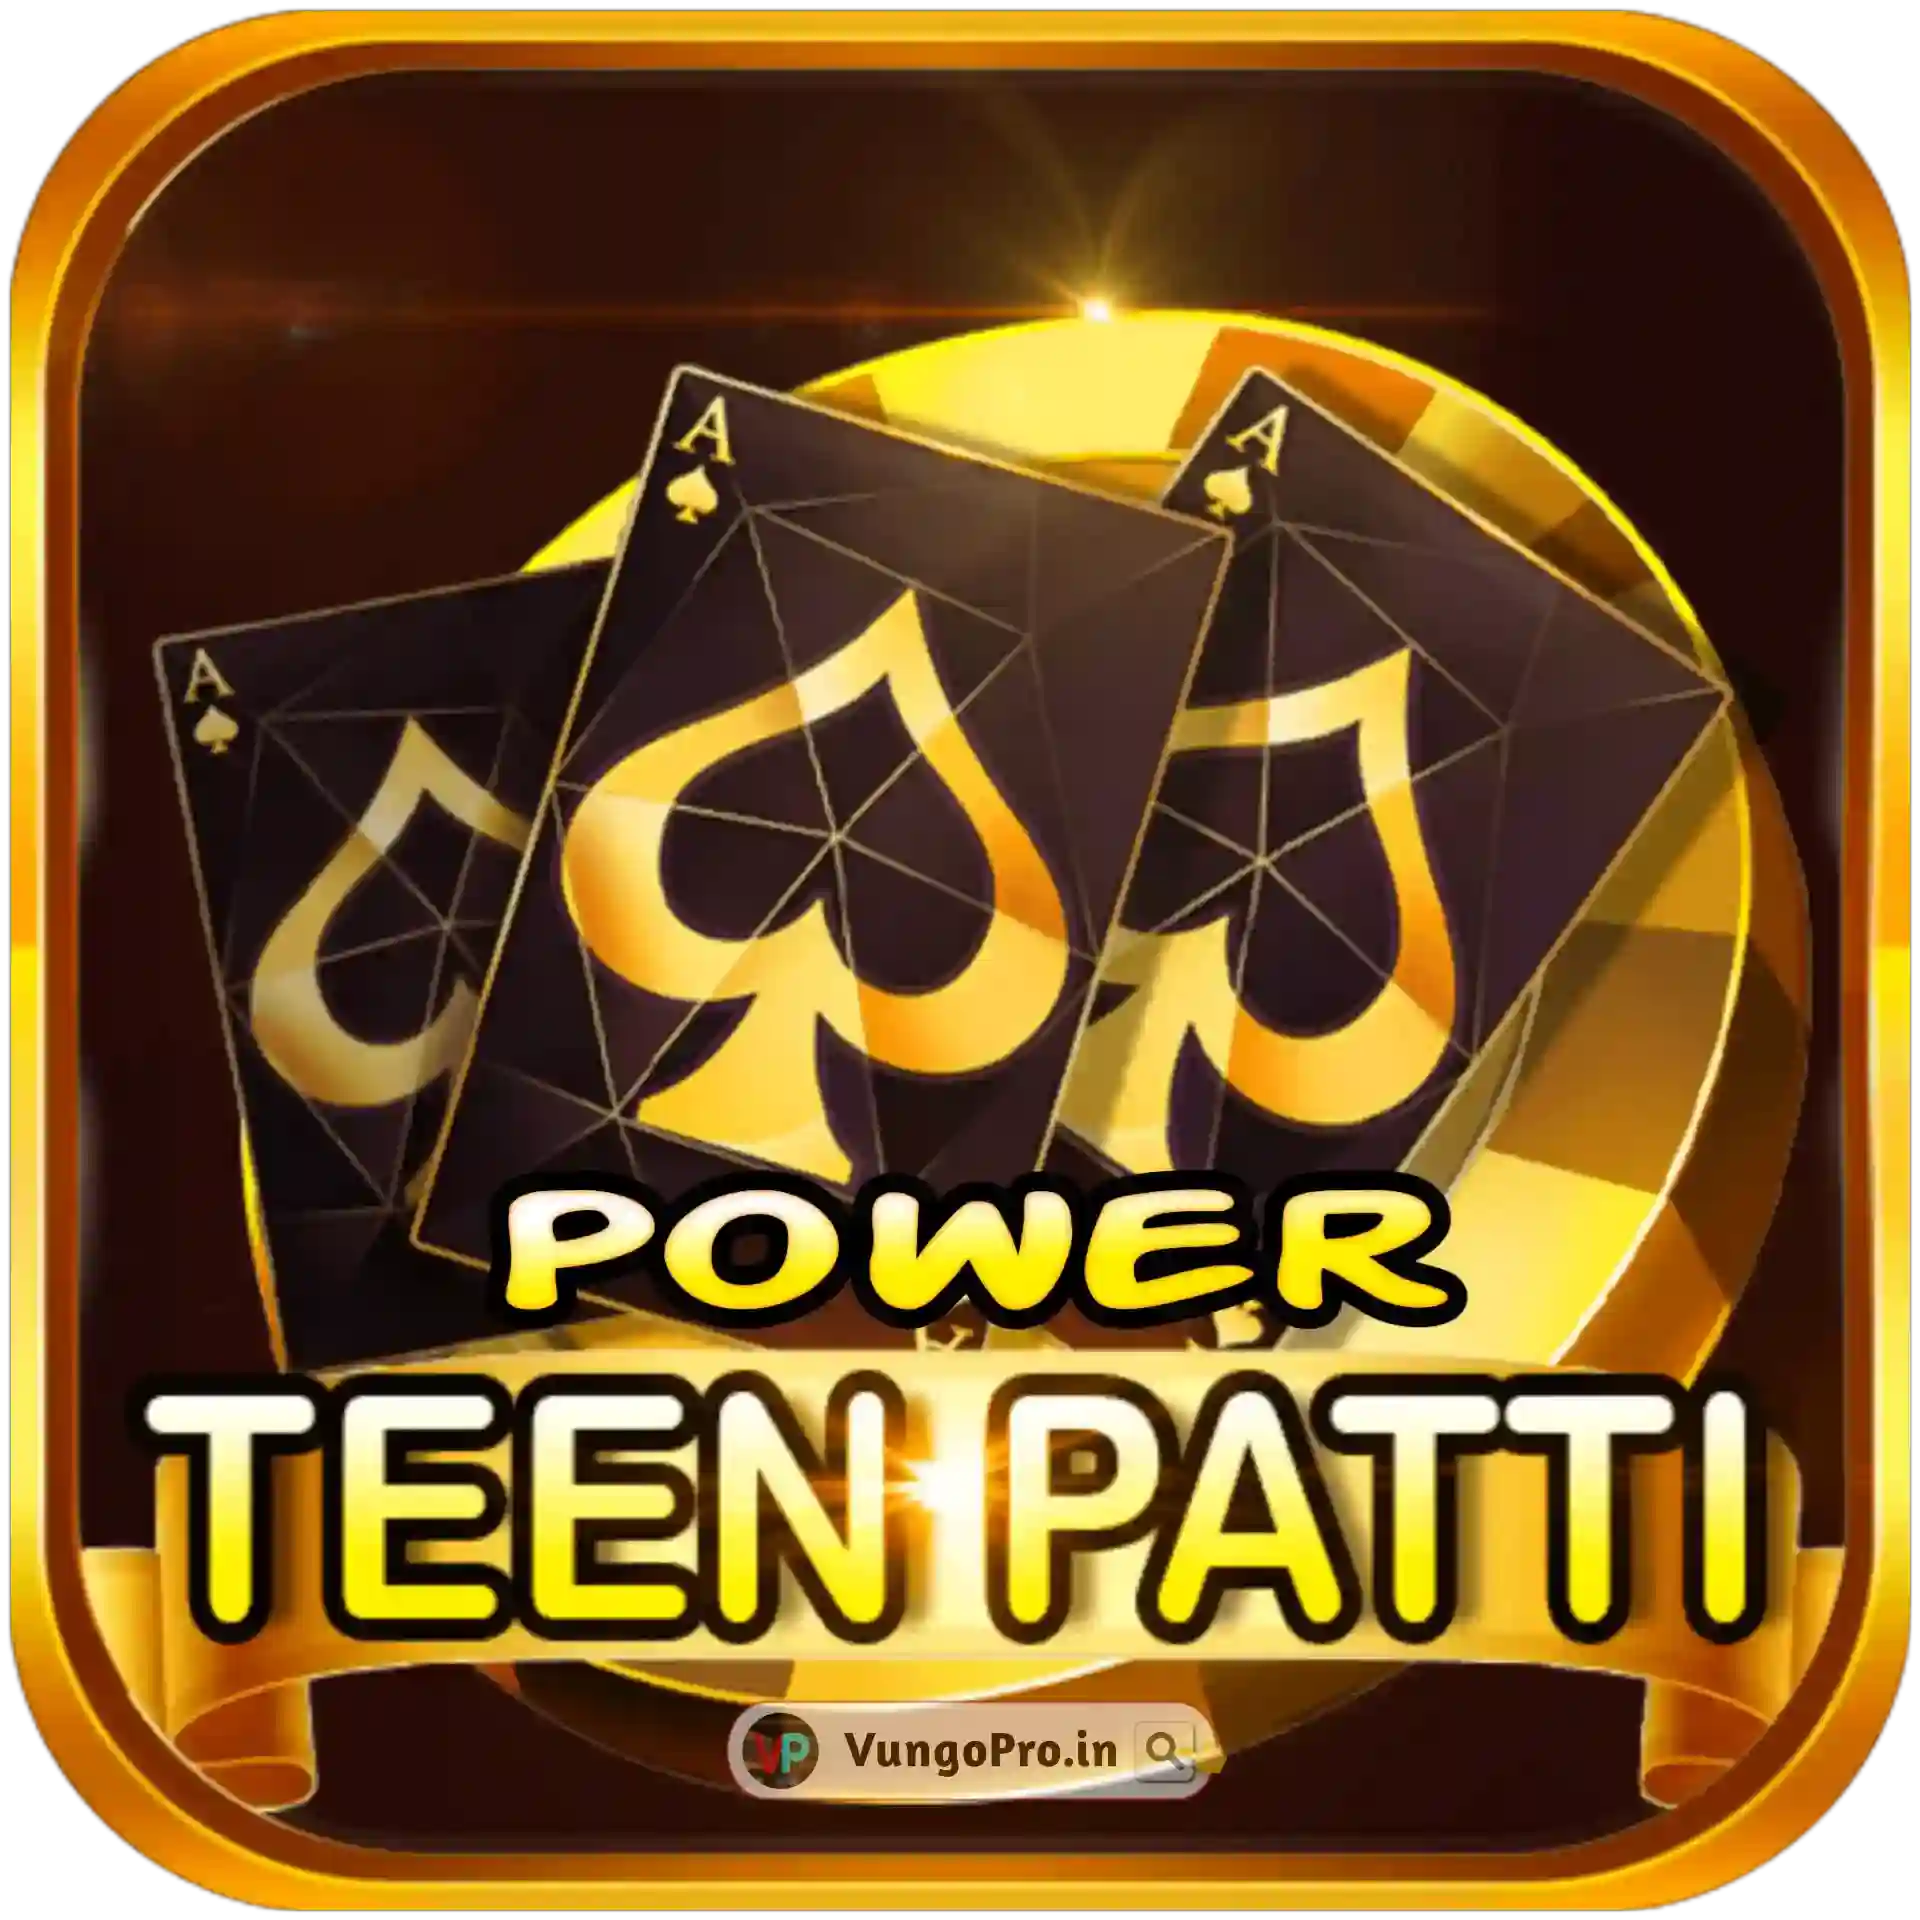 Teen Patti Power Logo - All Best Rummy App